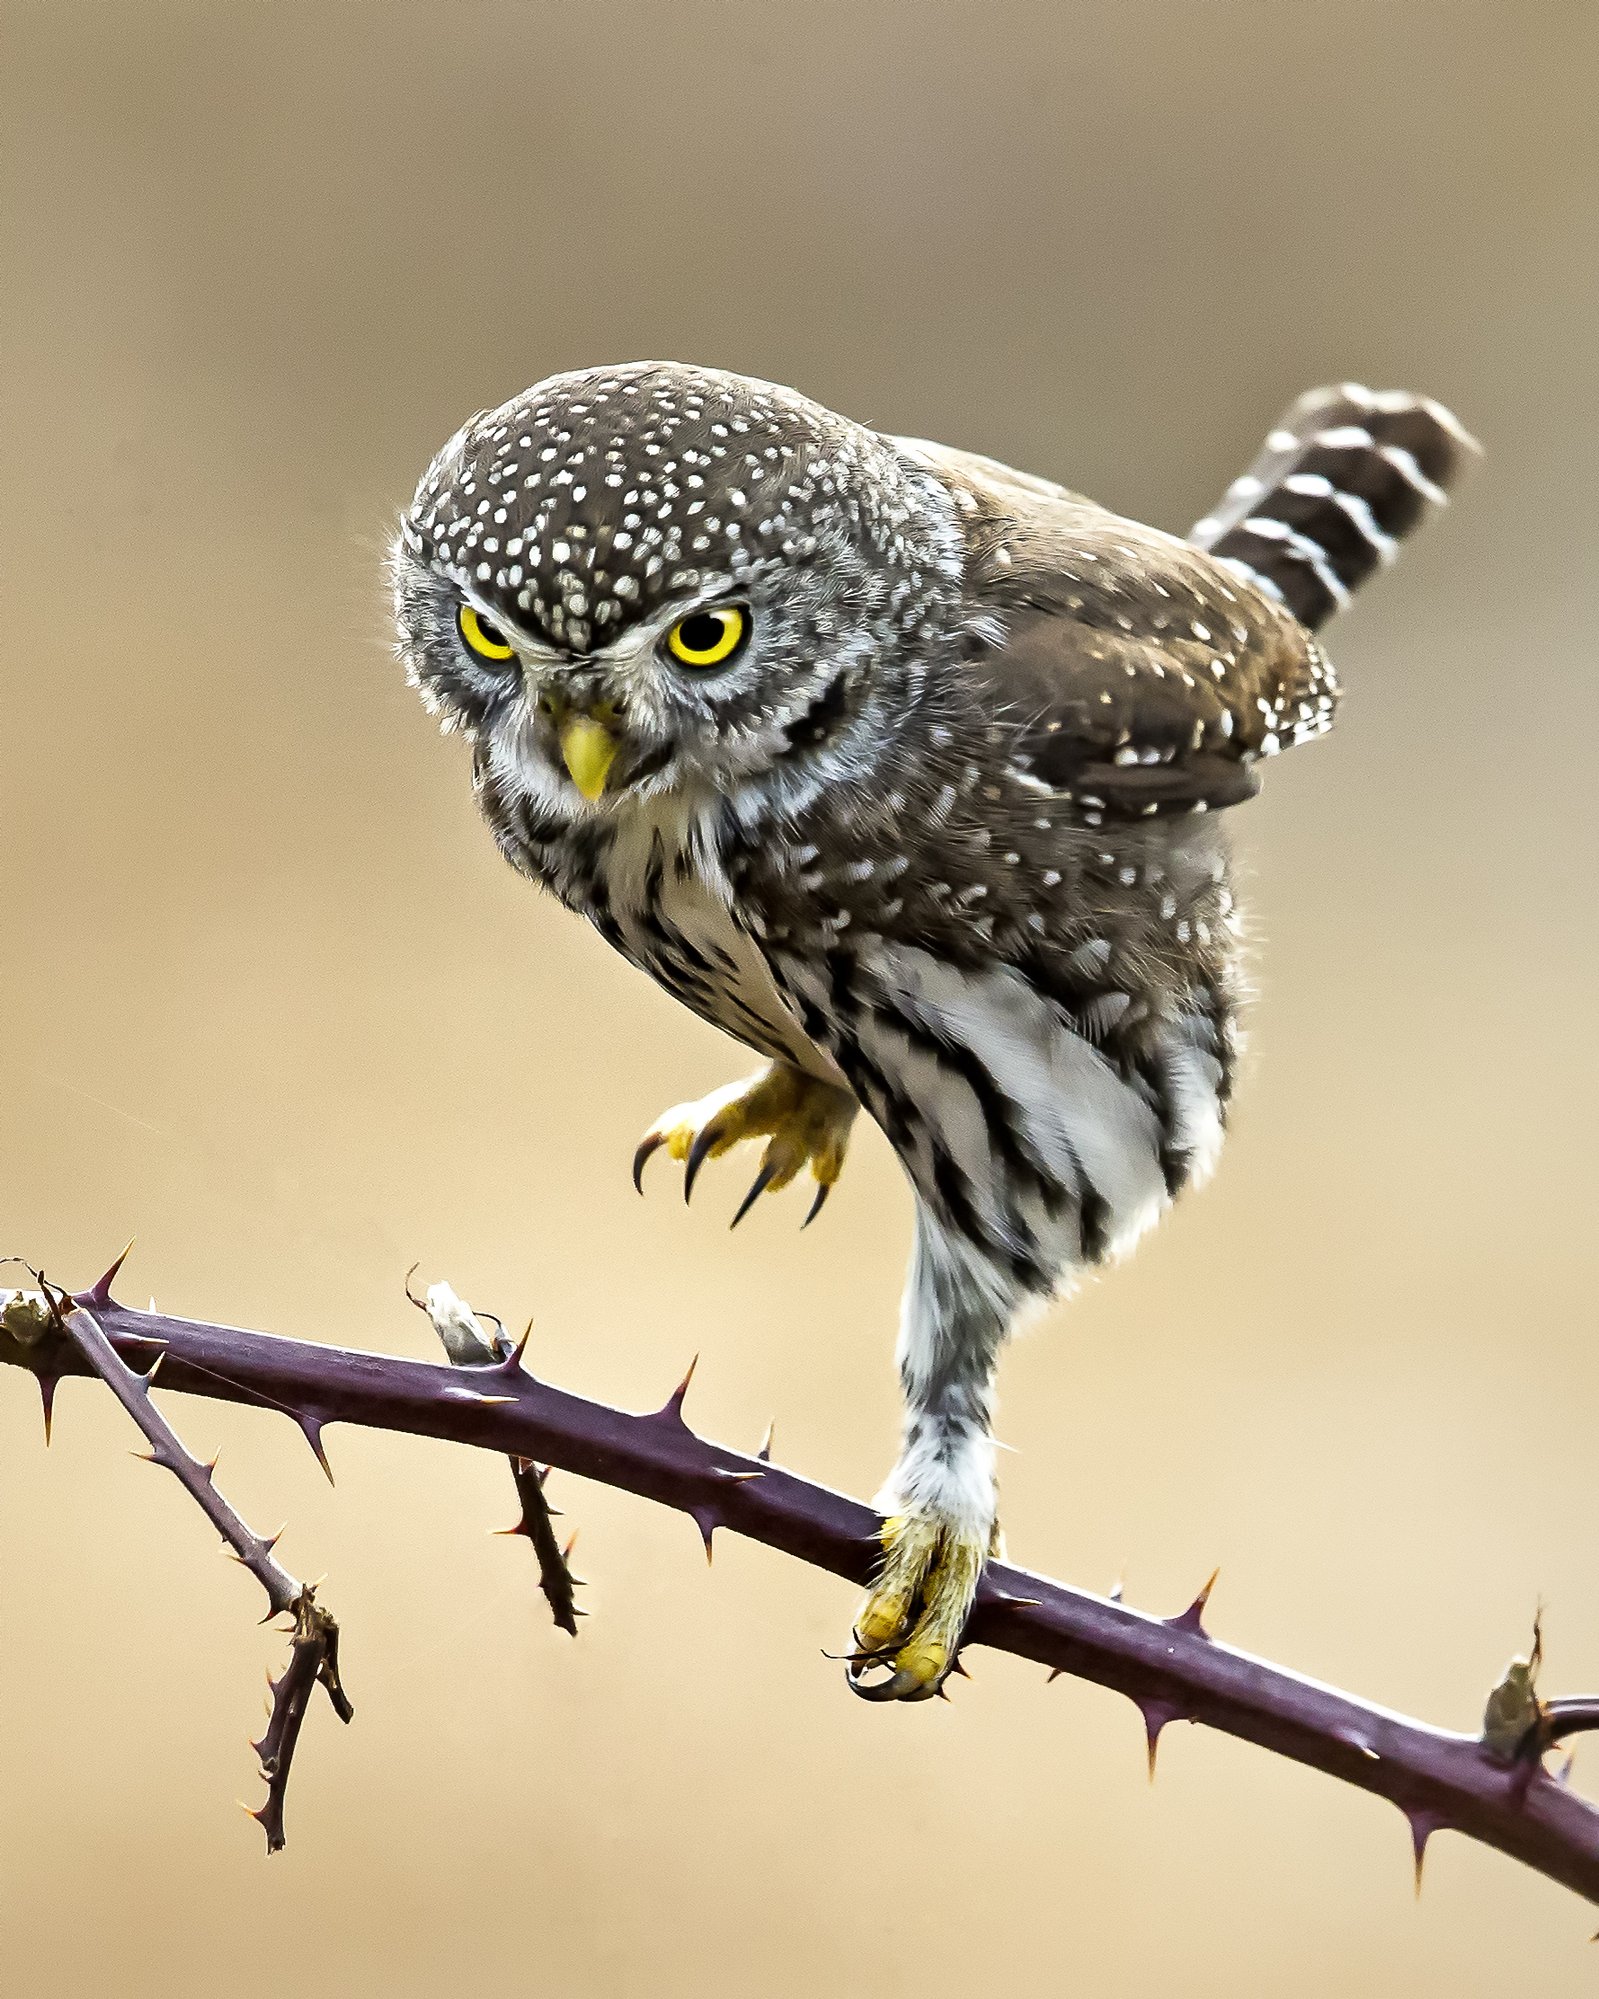 Pygmy Owl by William Murdock